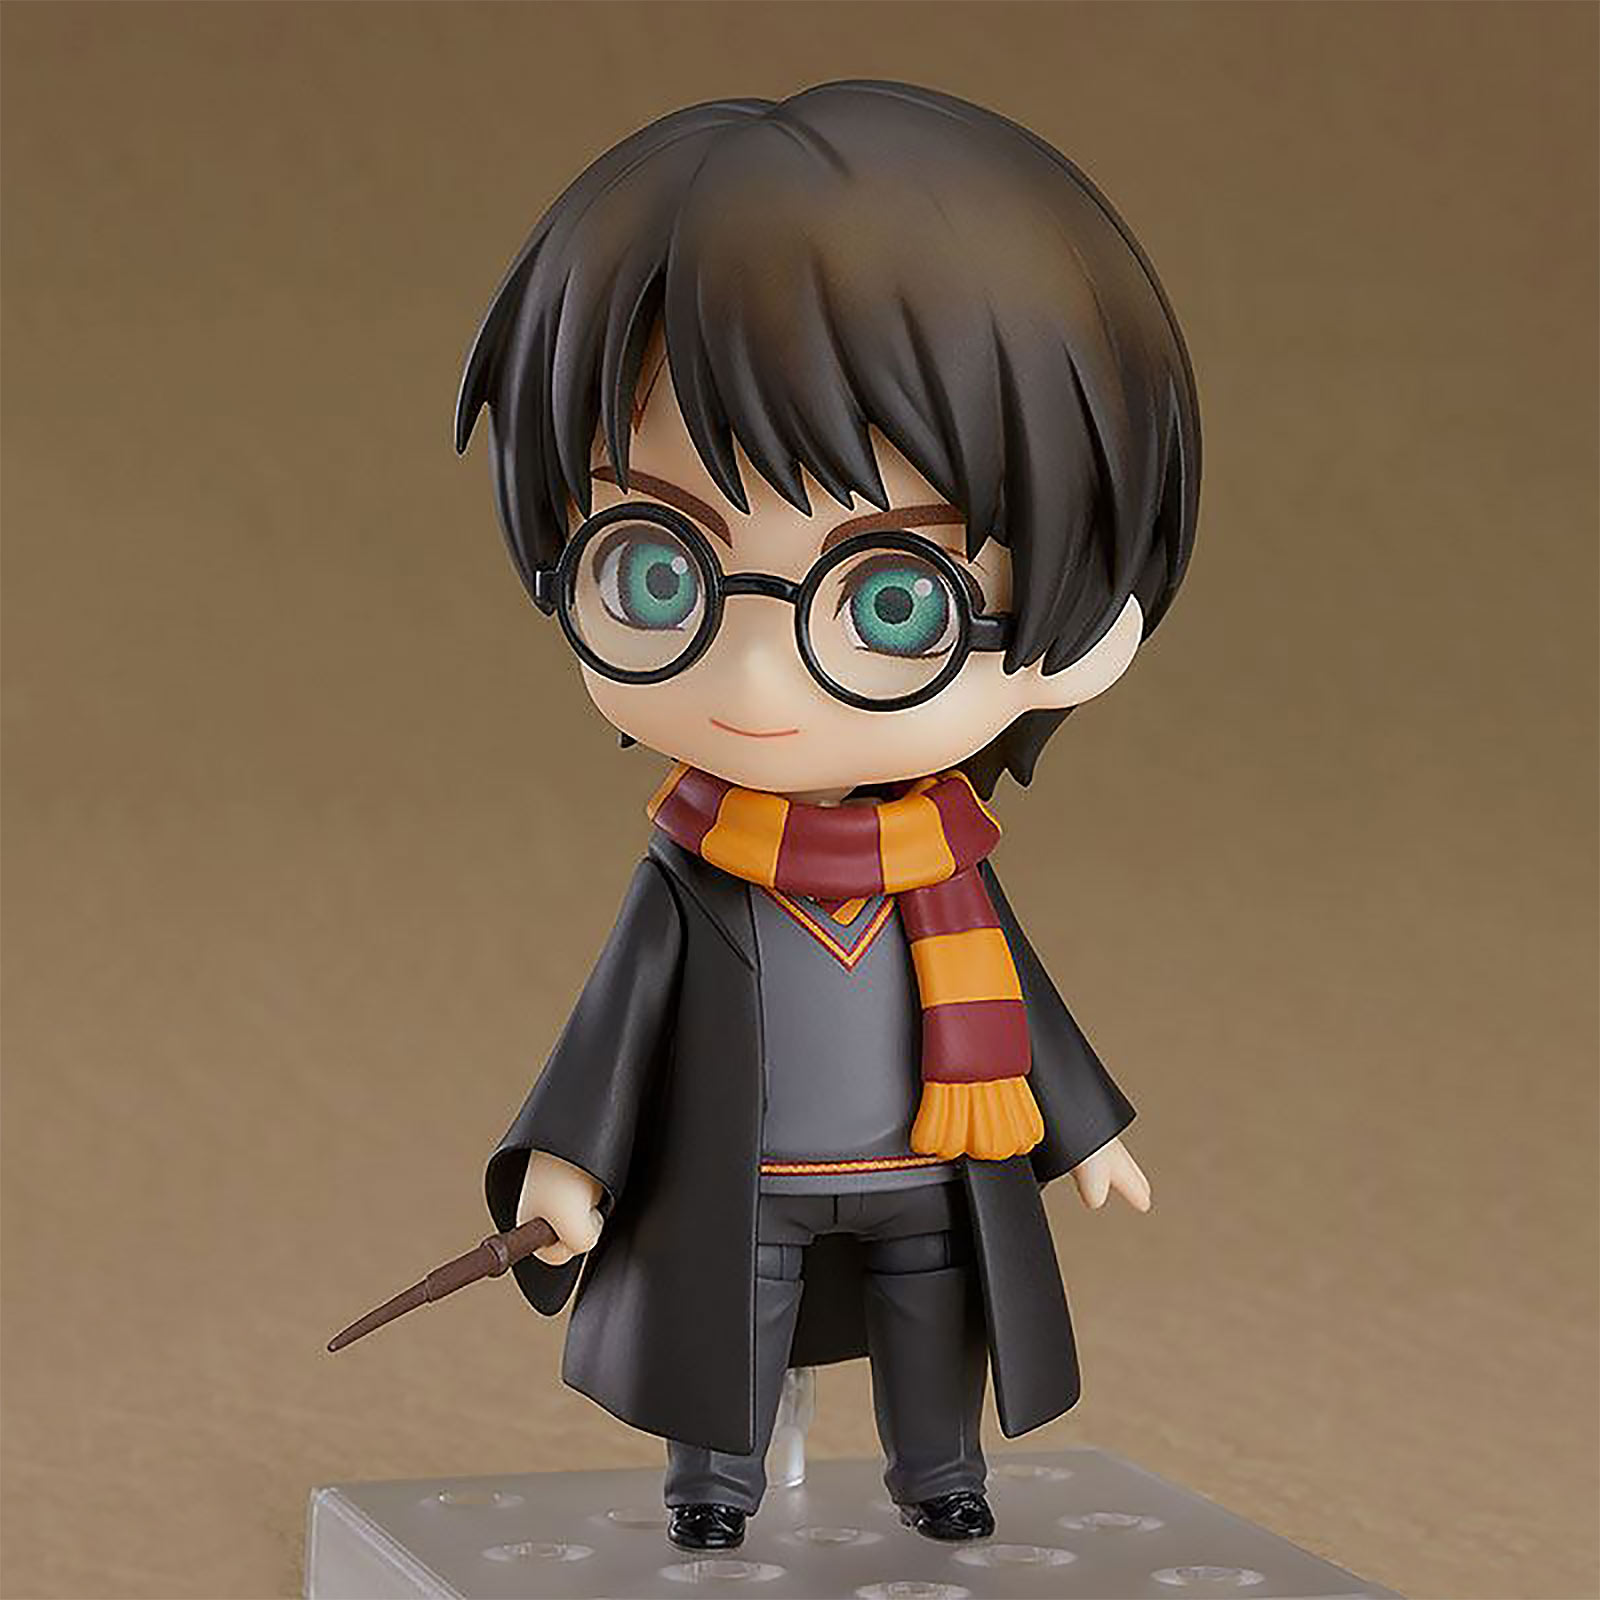 Harry Potter - Figurine d'action